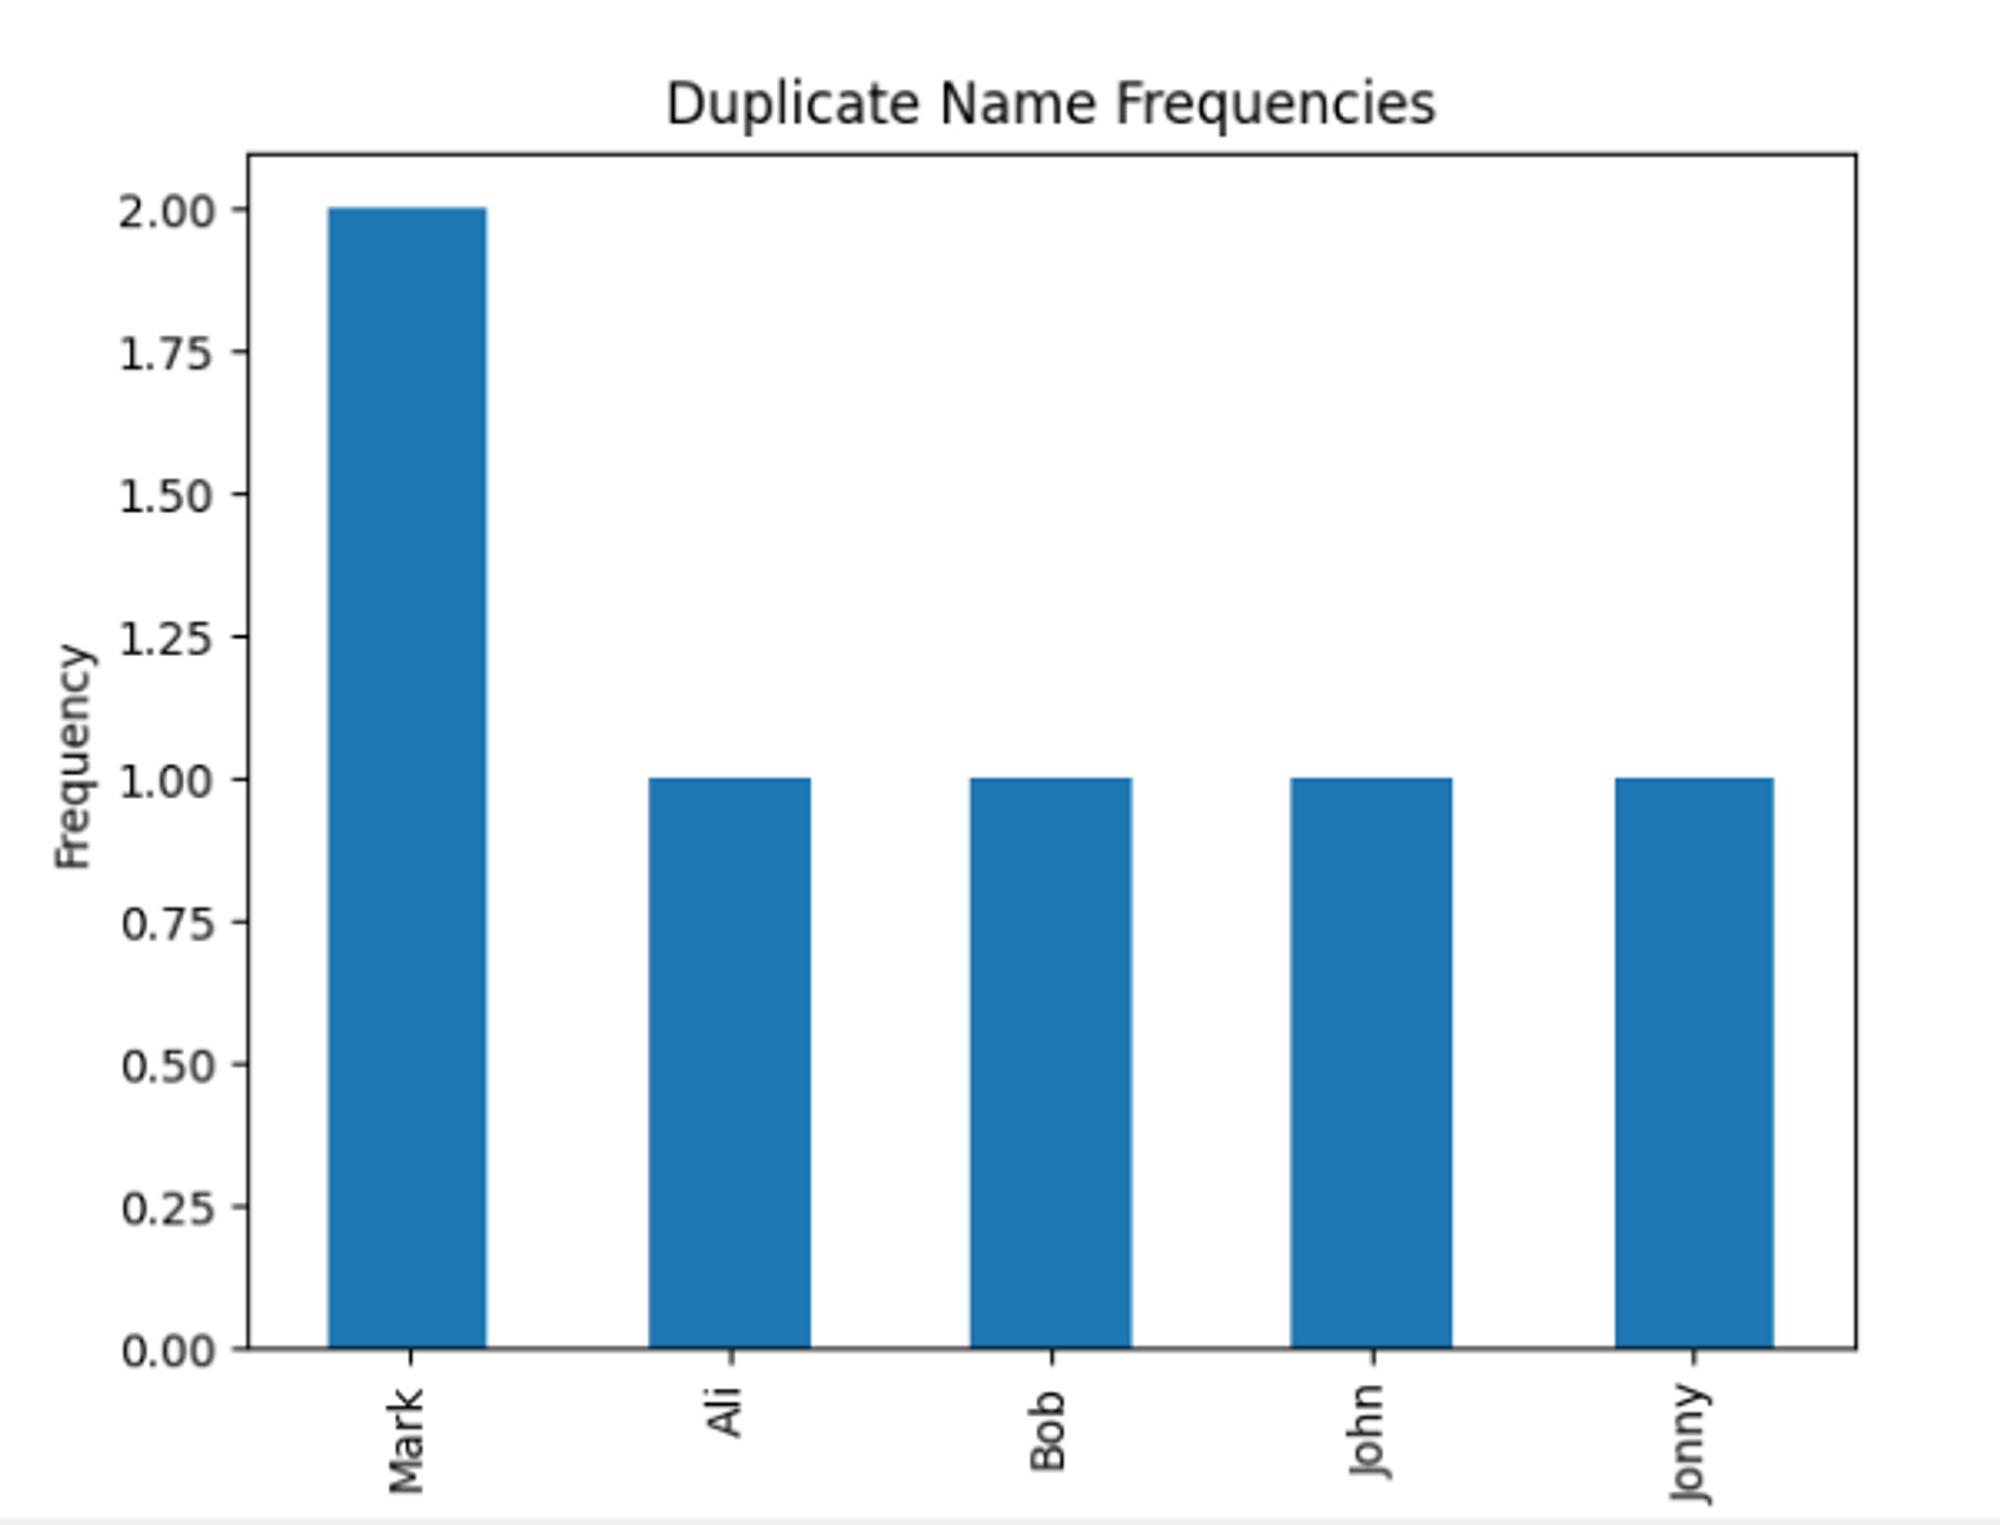 Handling Duplicate Values in a Pandas DataFrame